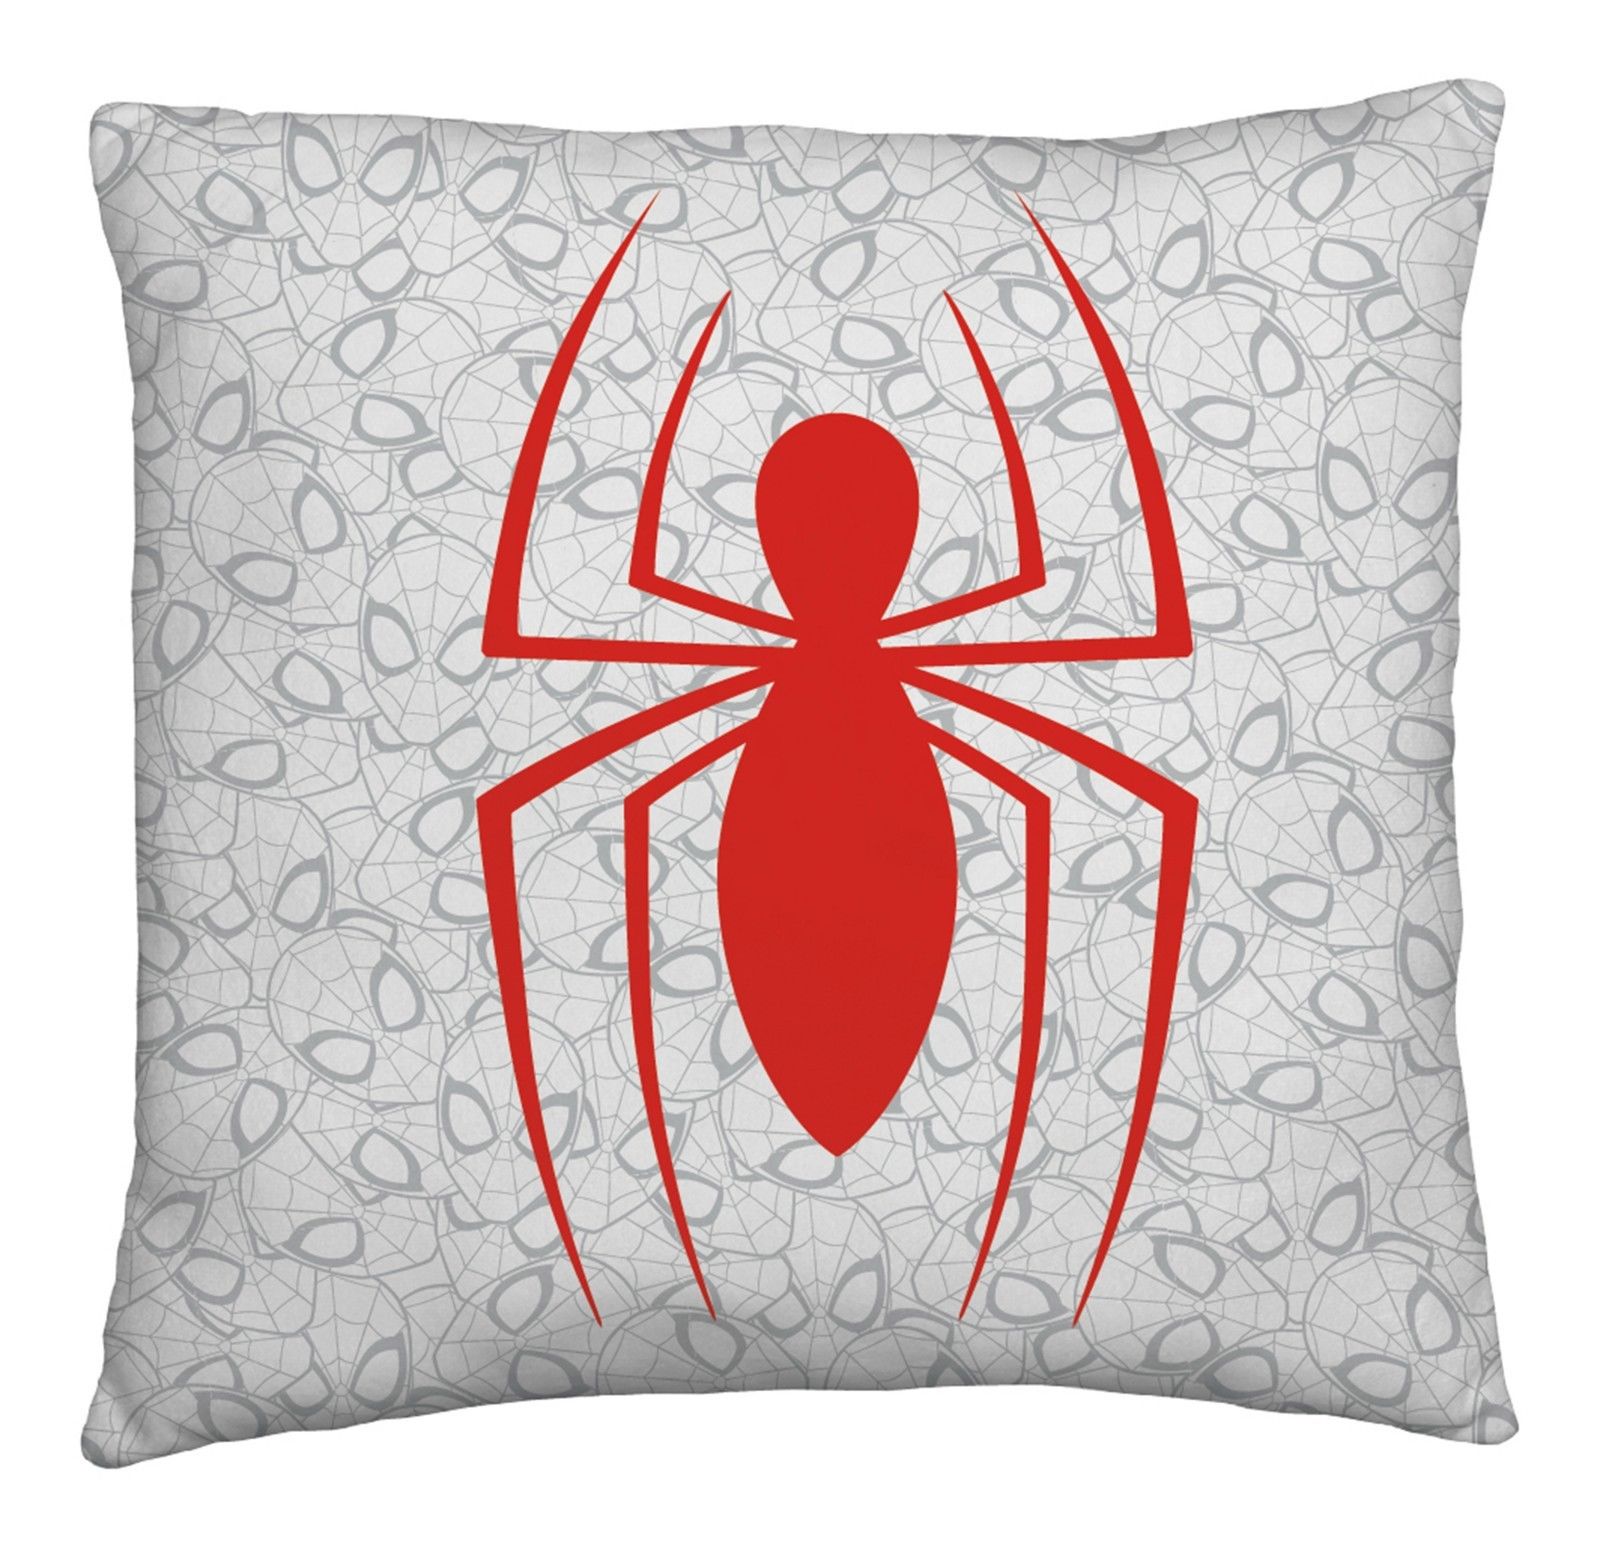 Spider Man Metropolis Square Printed Cushion